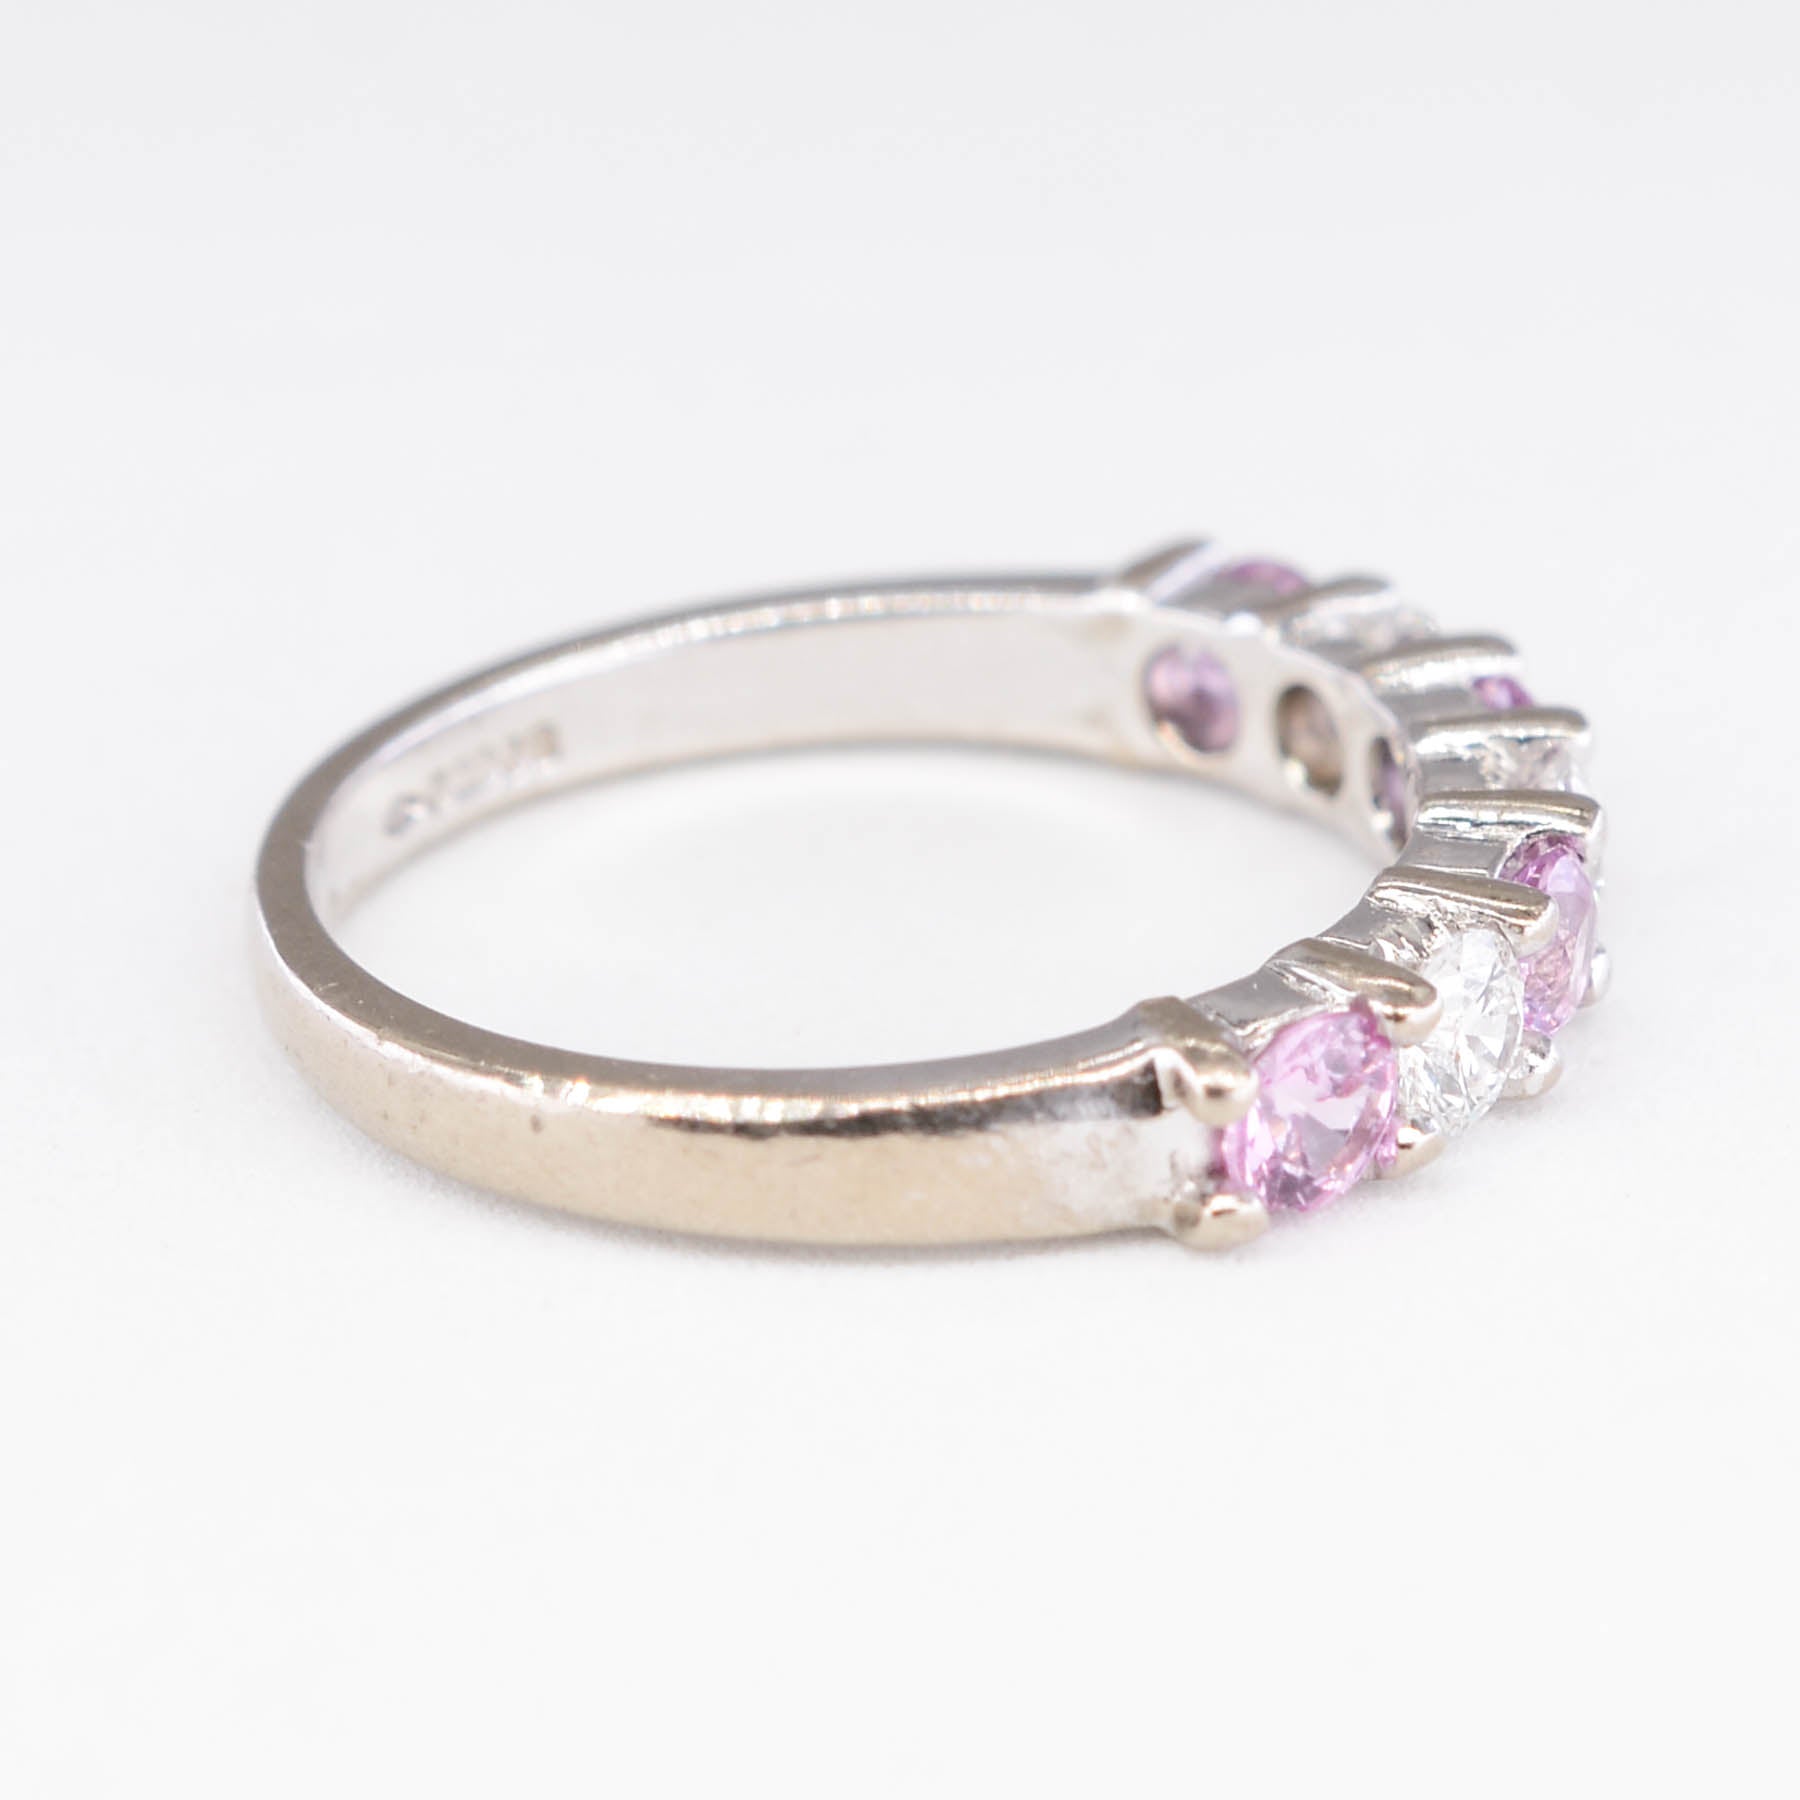 18k Pink Sapphire and Diamond Ring | 0.36ctw, 0.28ctw | SZ 5 |